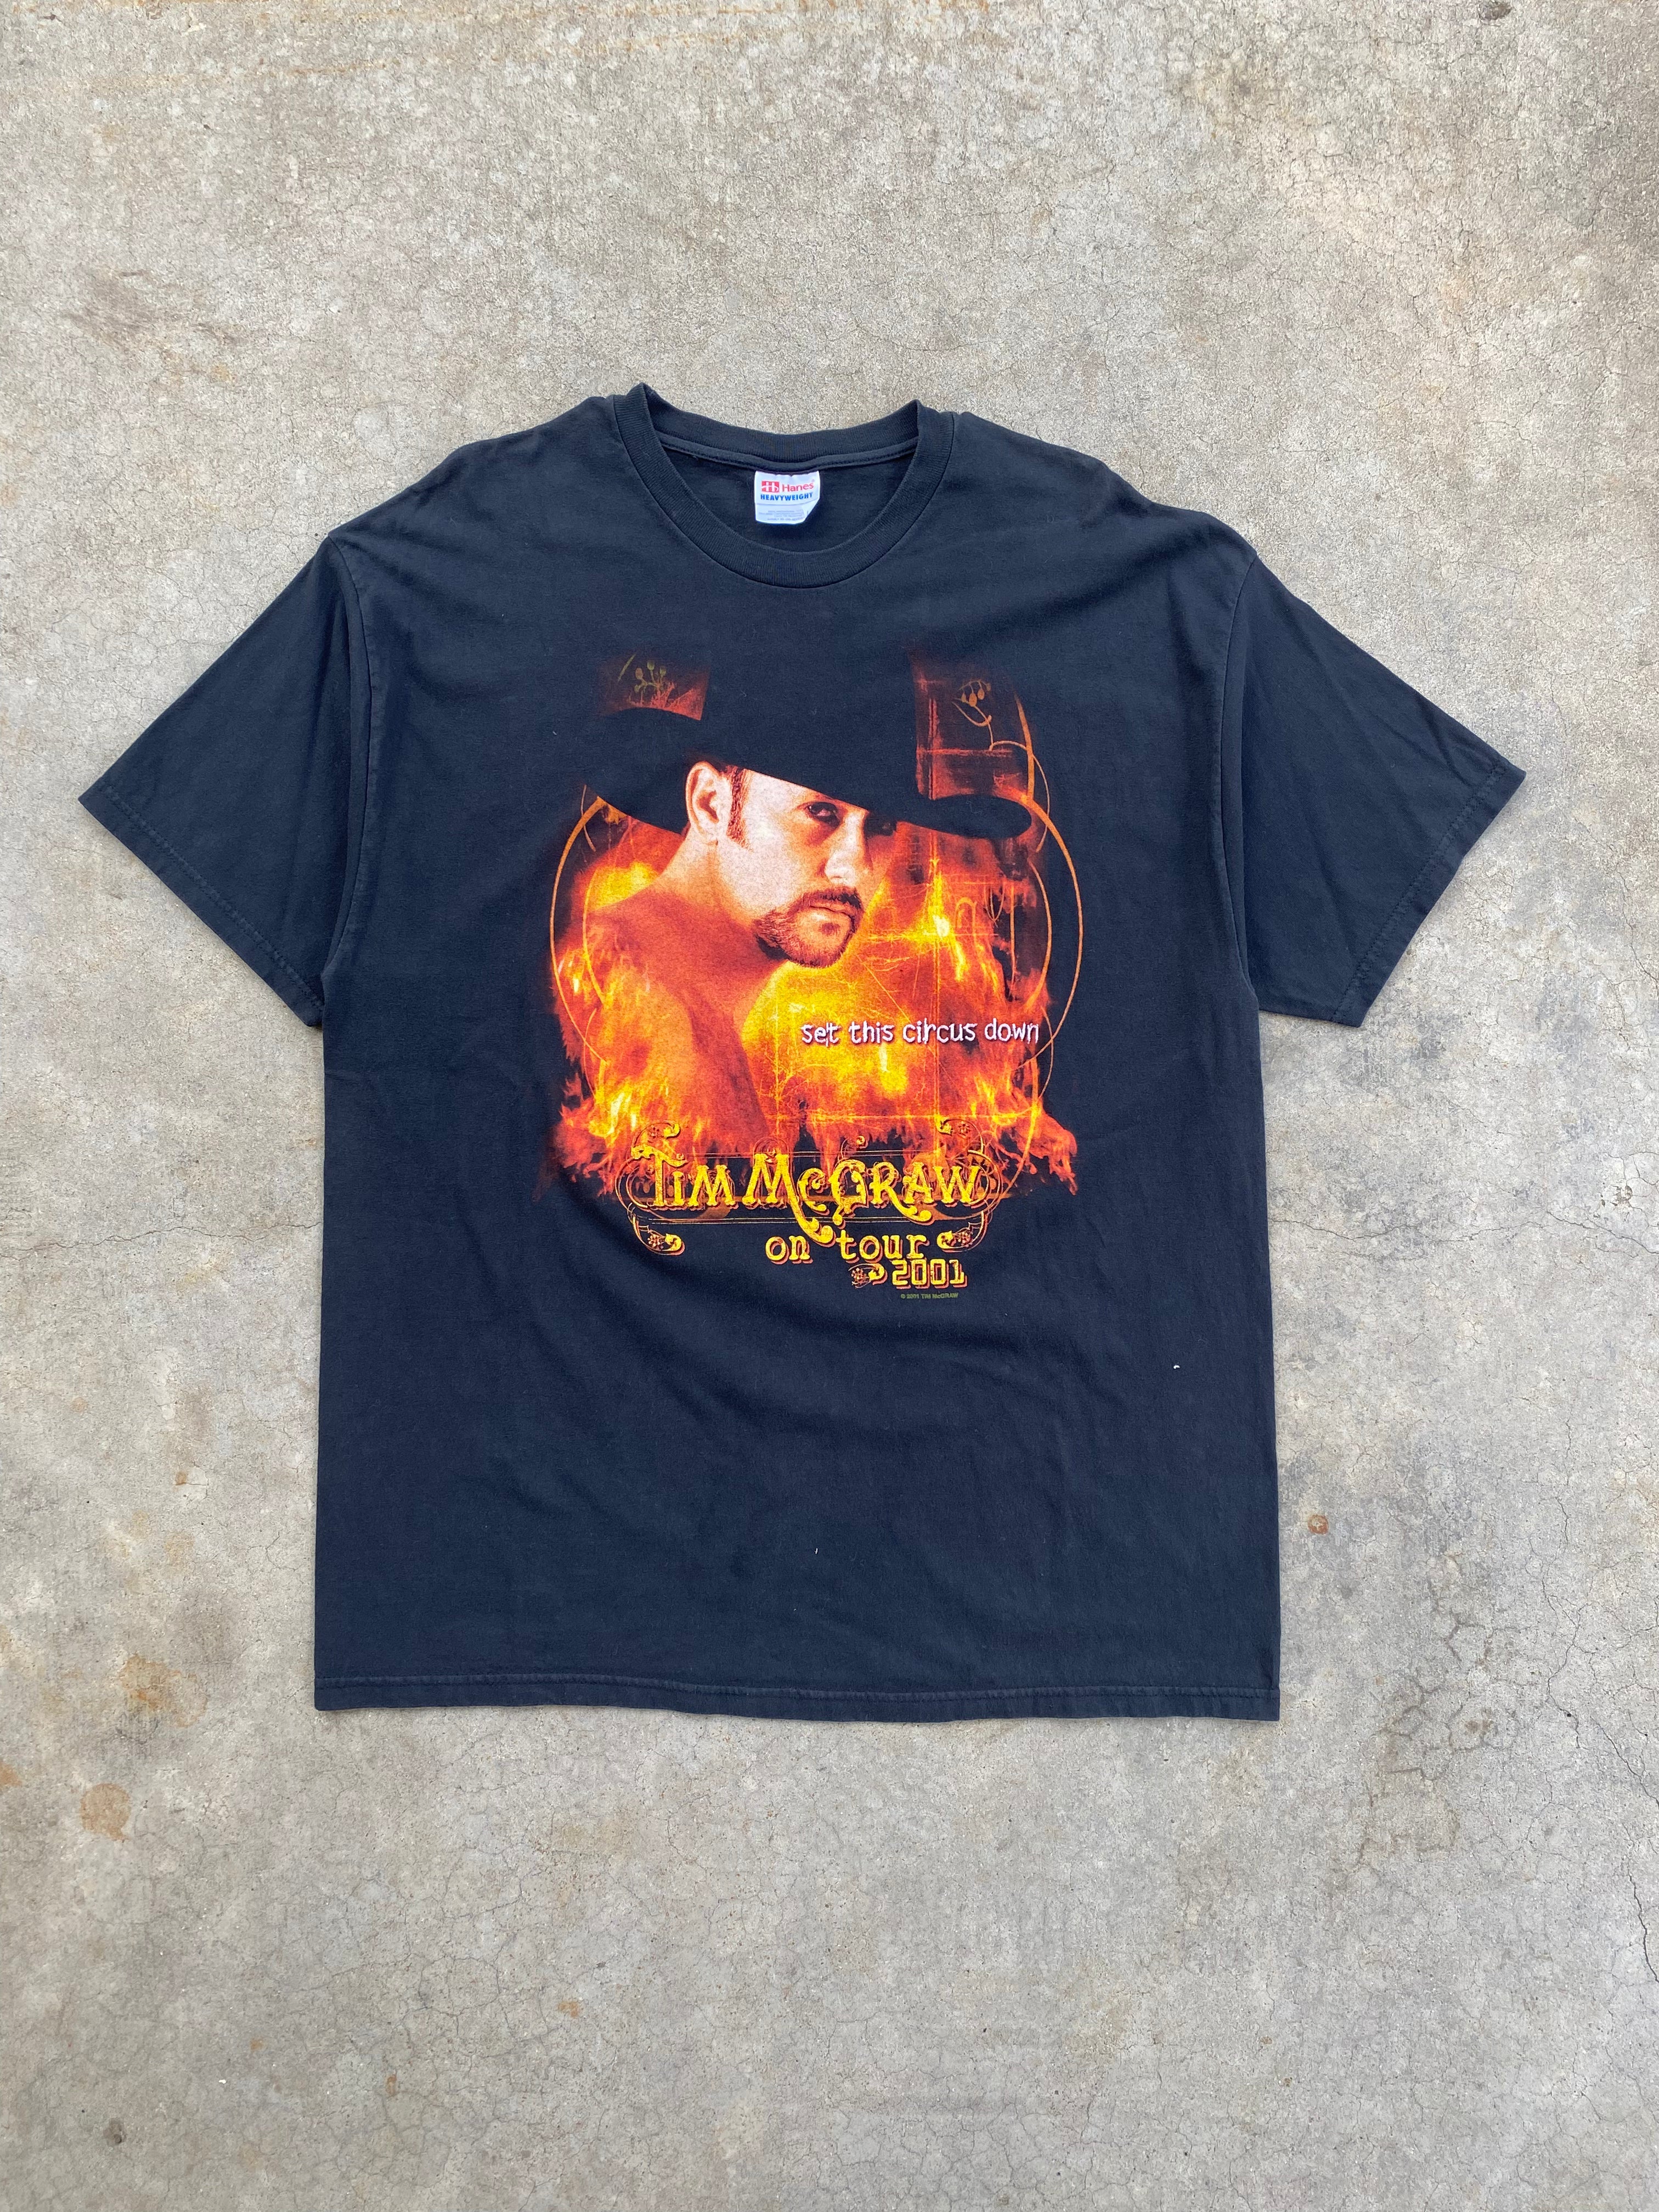 2001 Tim McGraw Set this Circus Down Tour T-Shirt